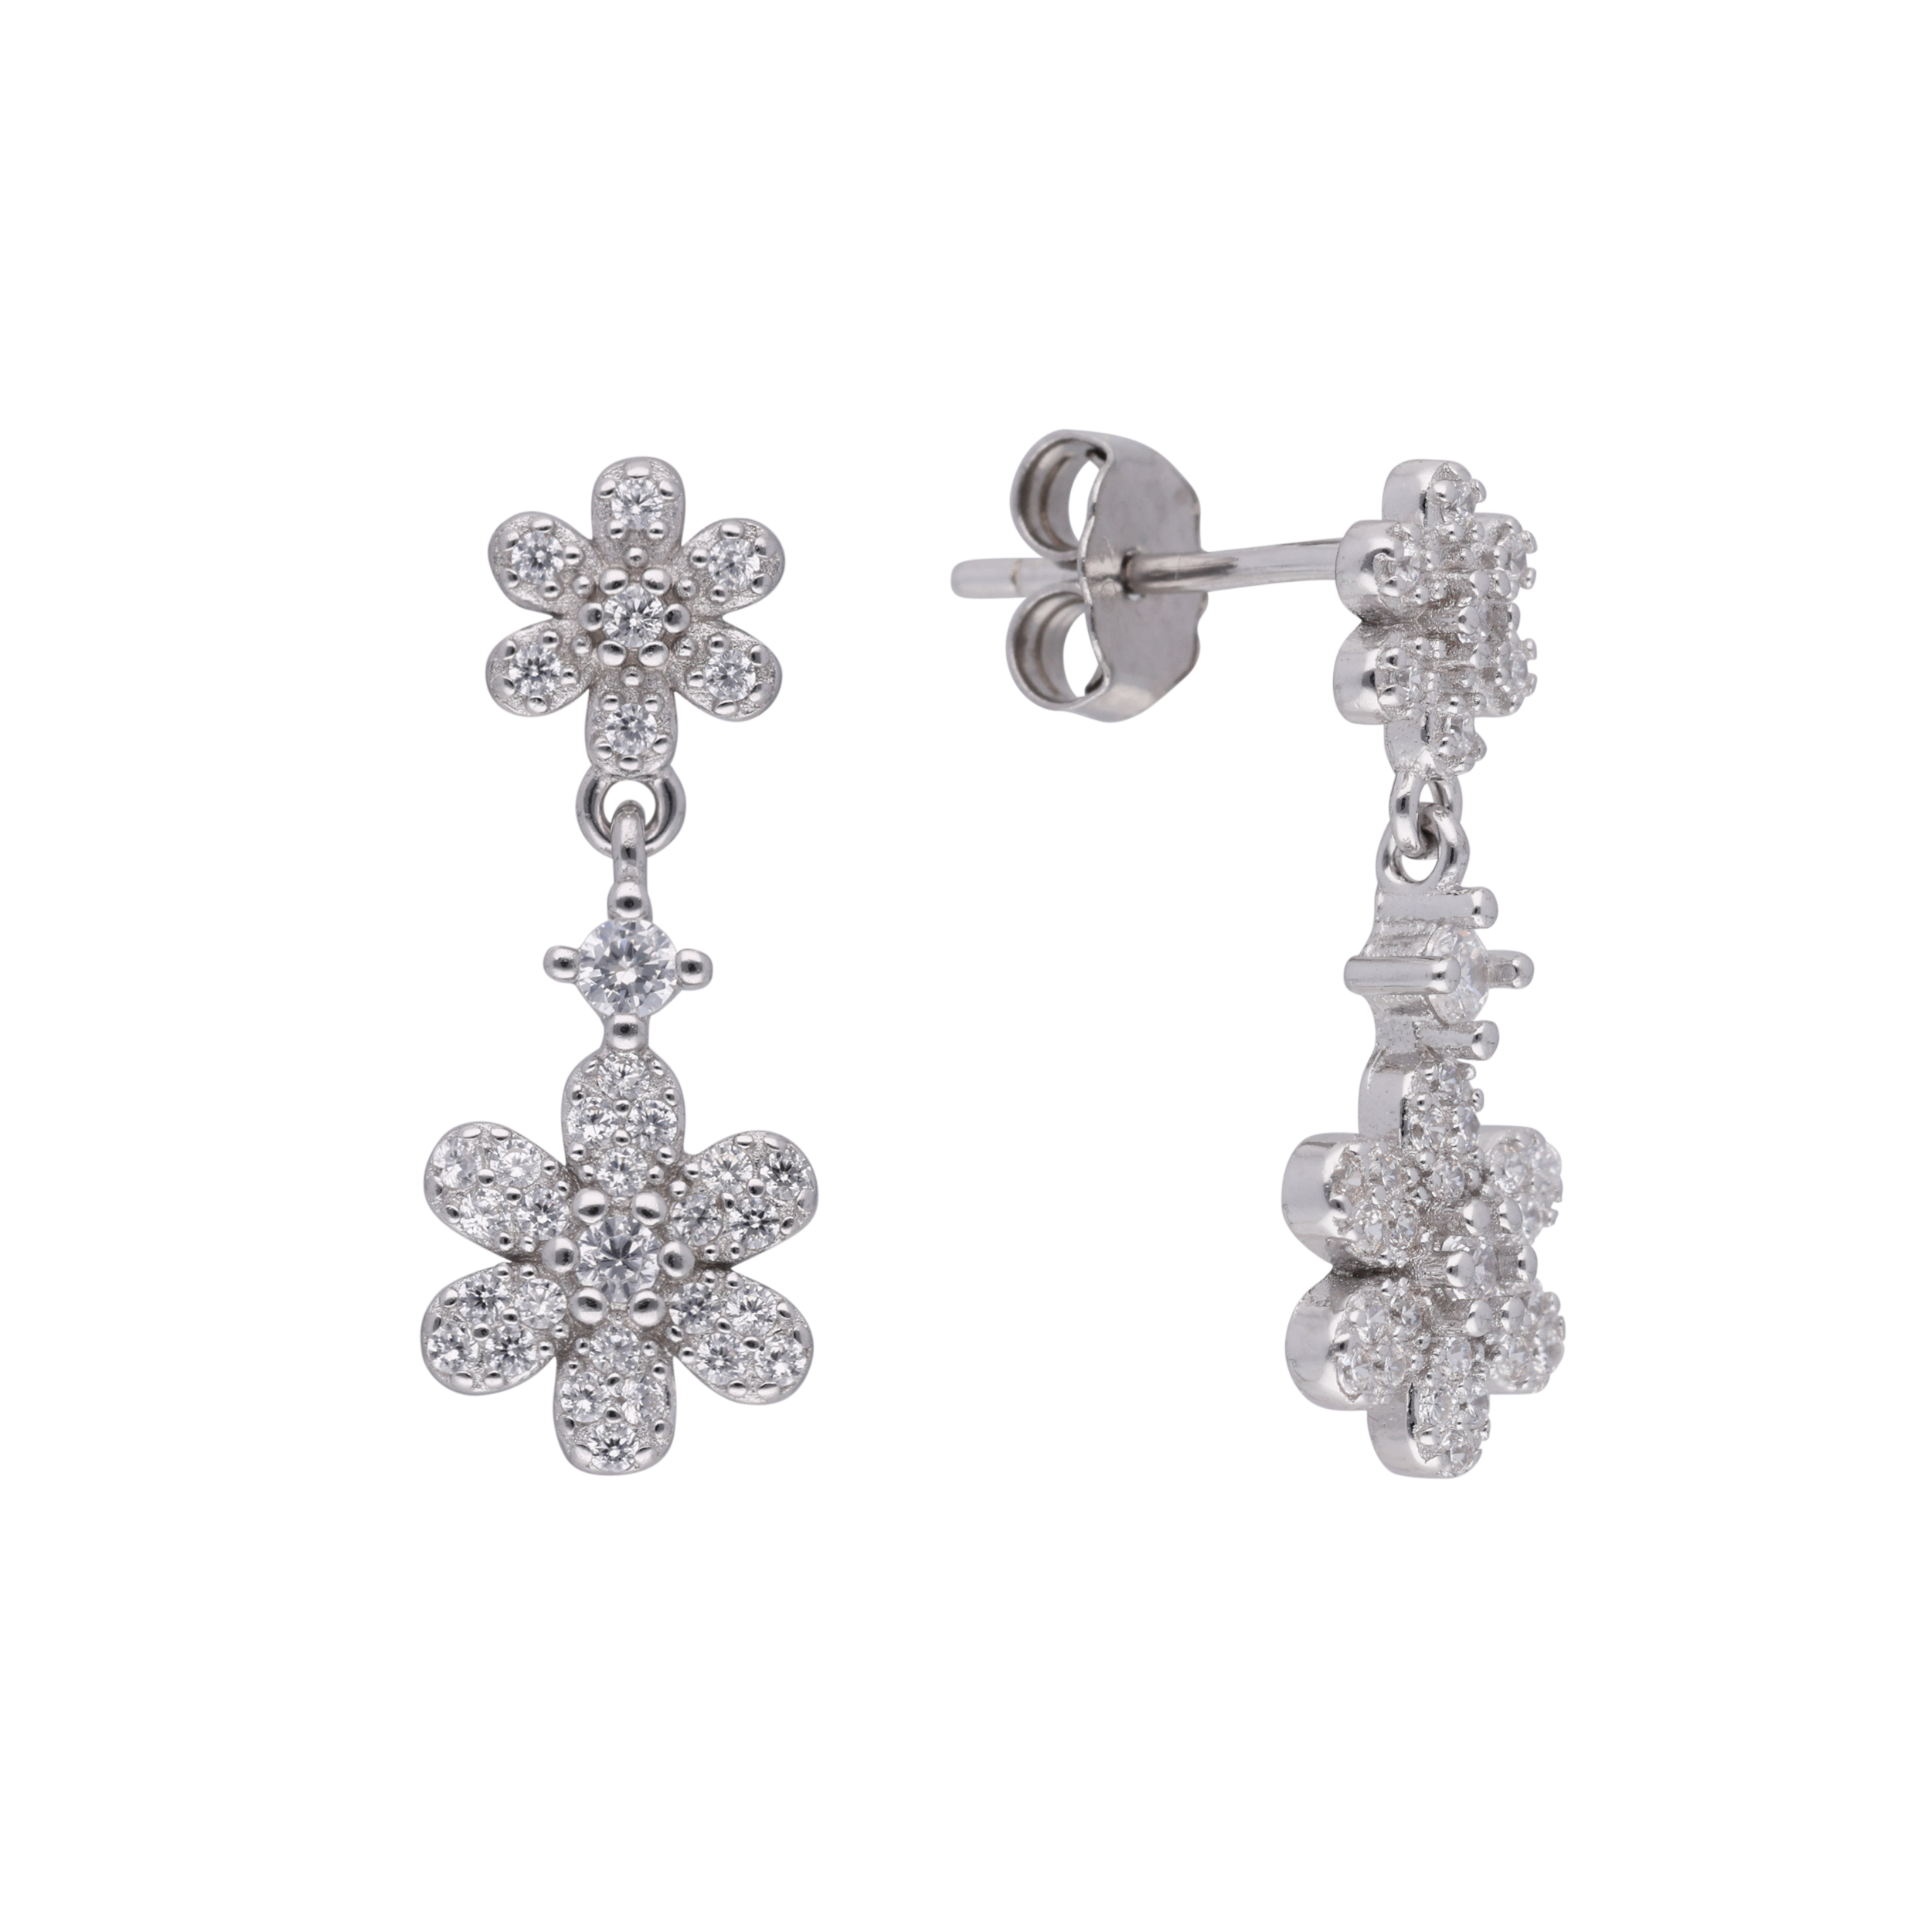 Floral Splendor: Sterling Silver Eardrops Adorned with Cubic Zircons | SKU : 0003113776, 0003113752